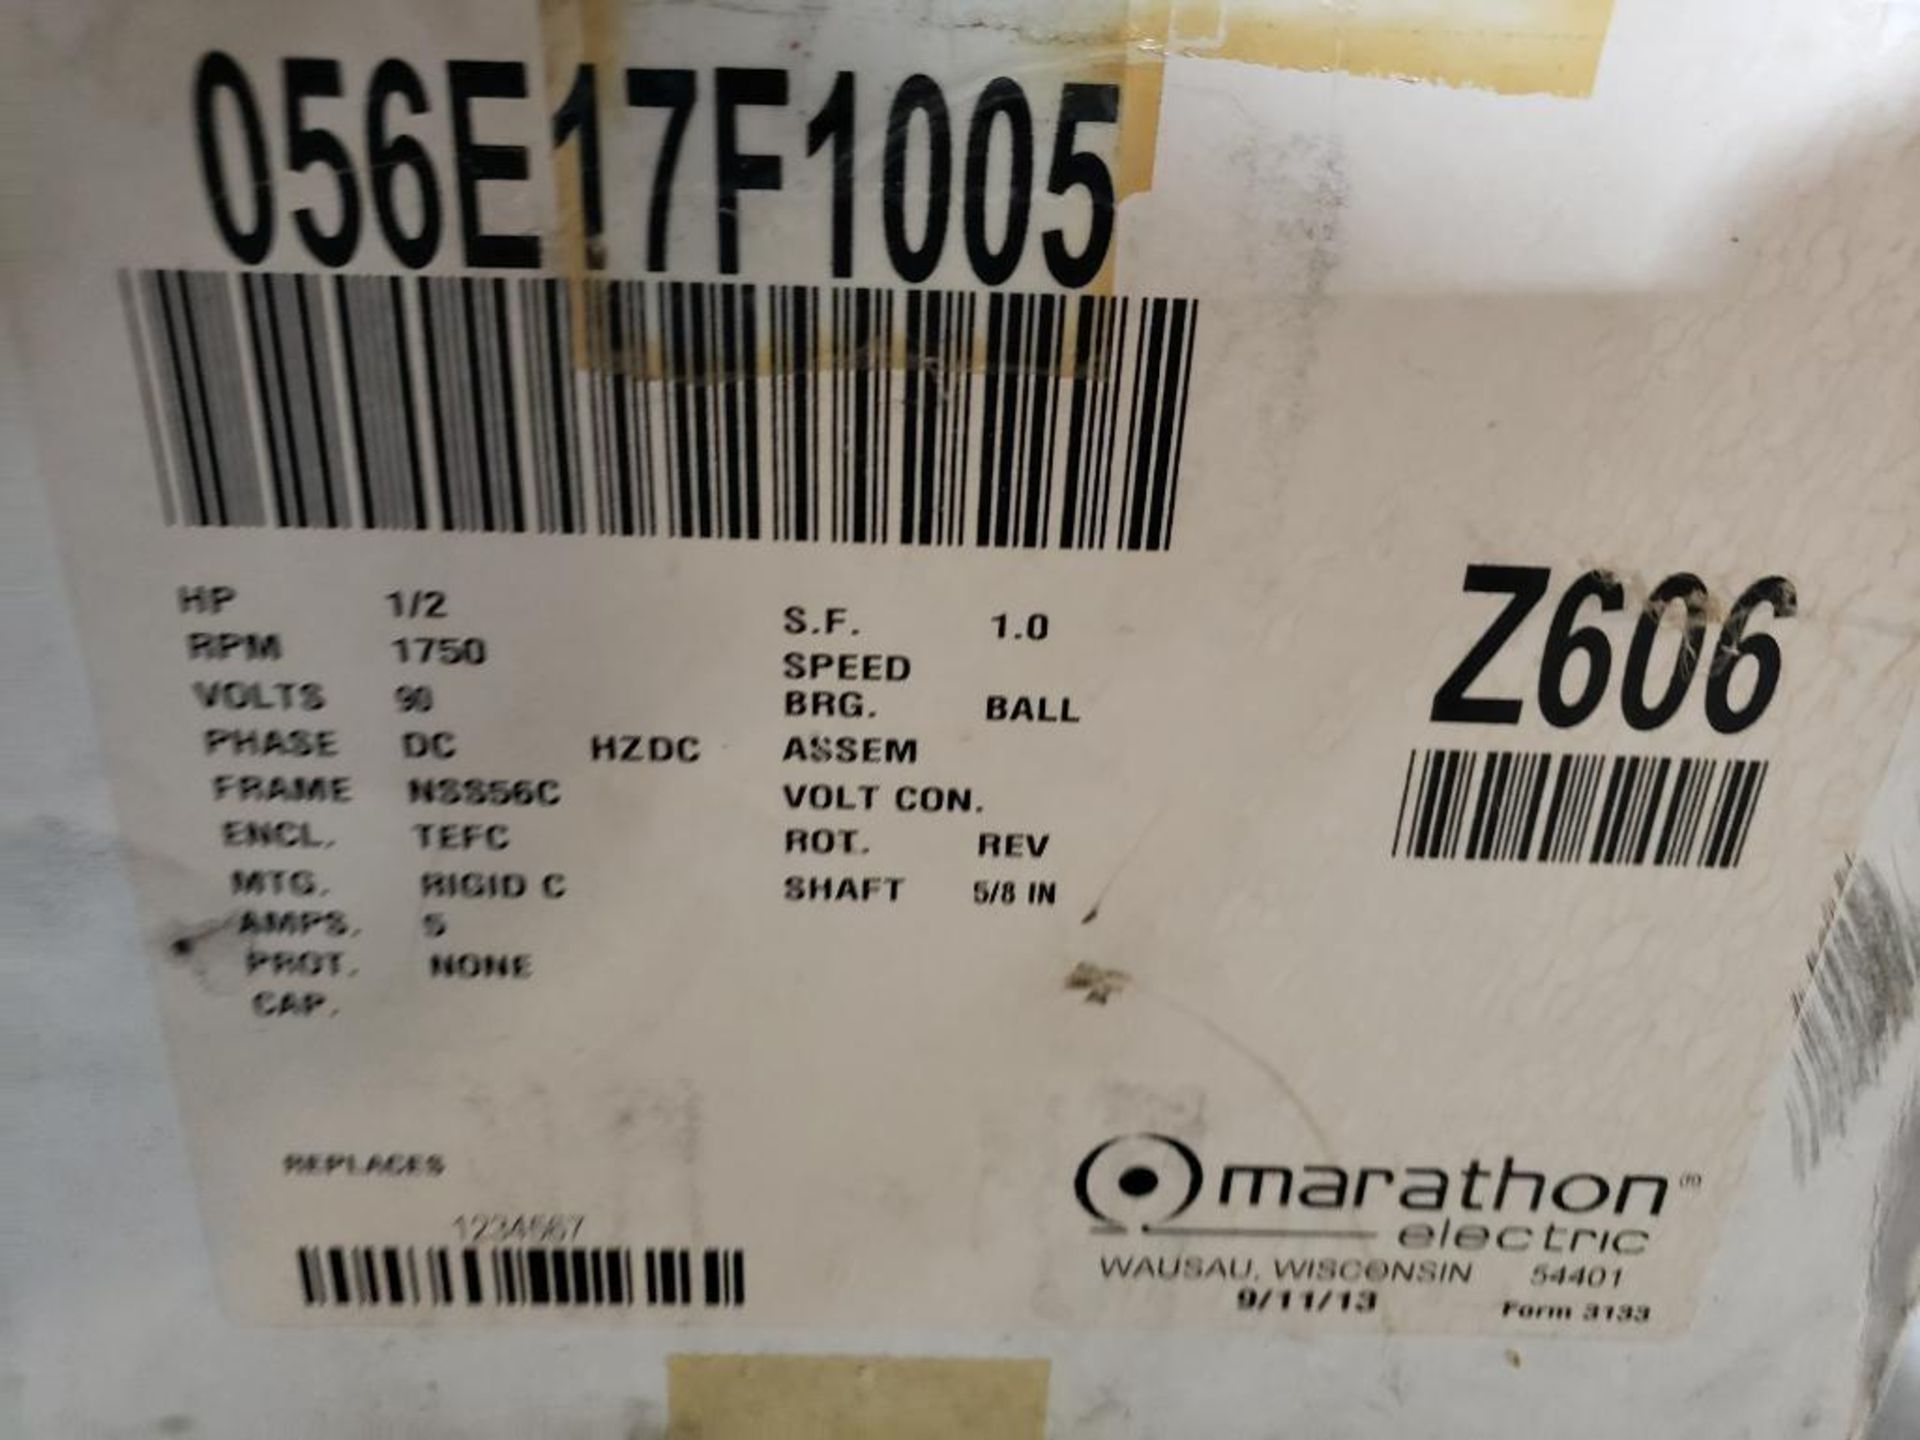 Marathon Electric control drive. Part number 056E17F1005. - Image 2 of 2